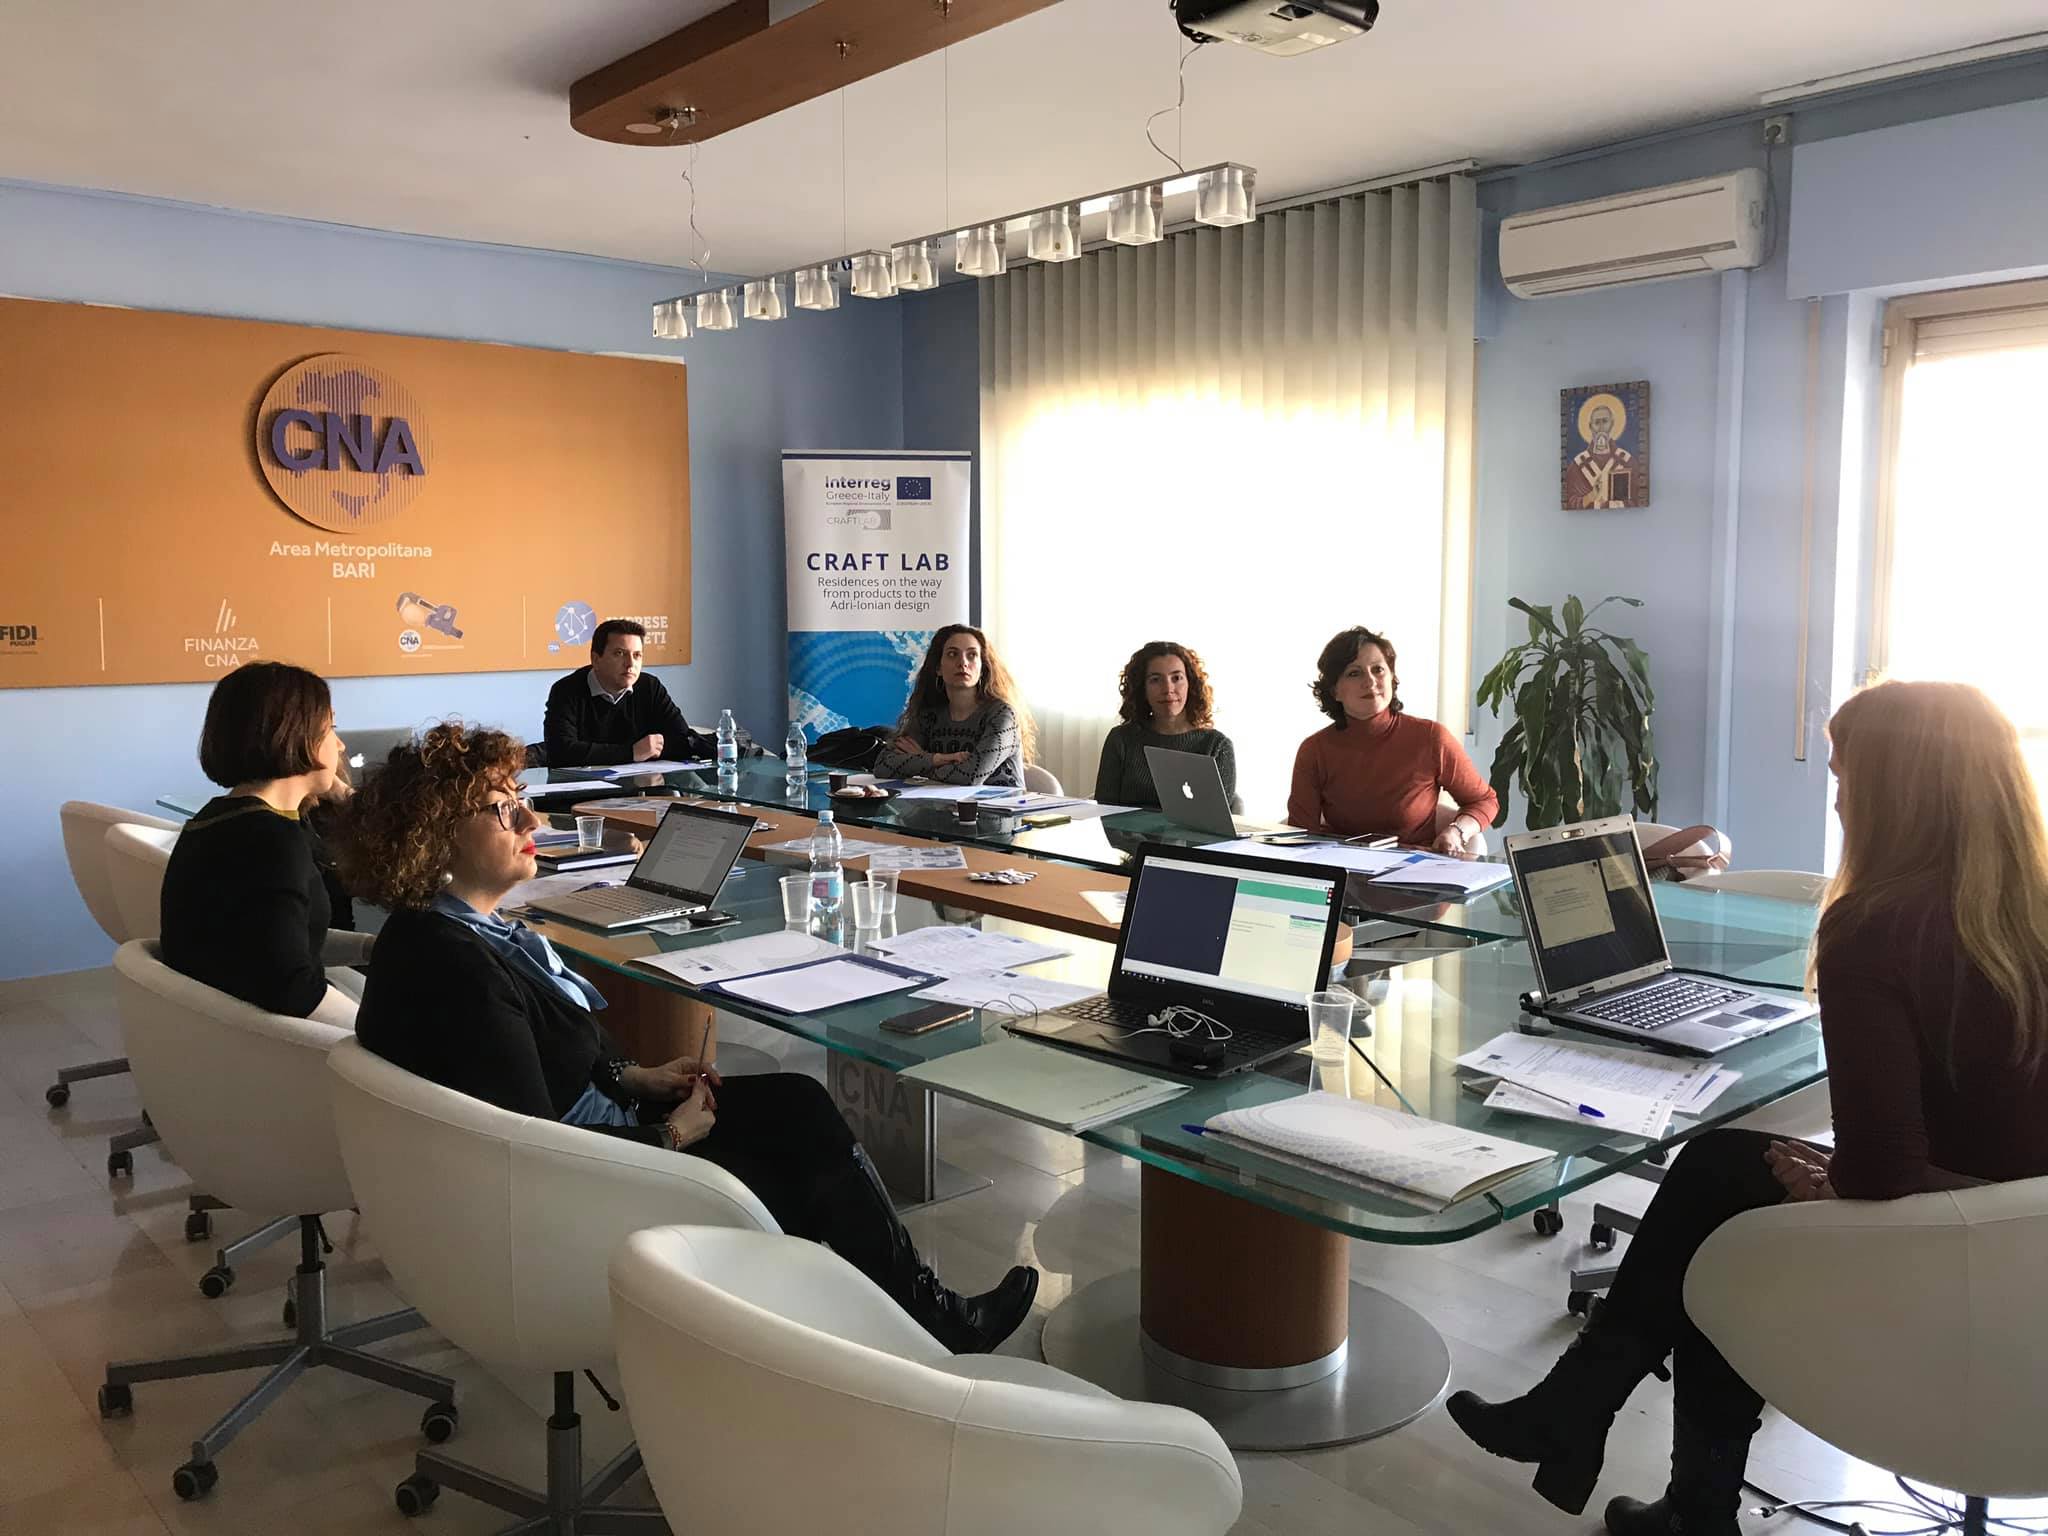 IV Craft Lab project meeting at CNA Bari